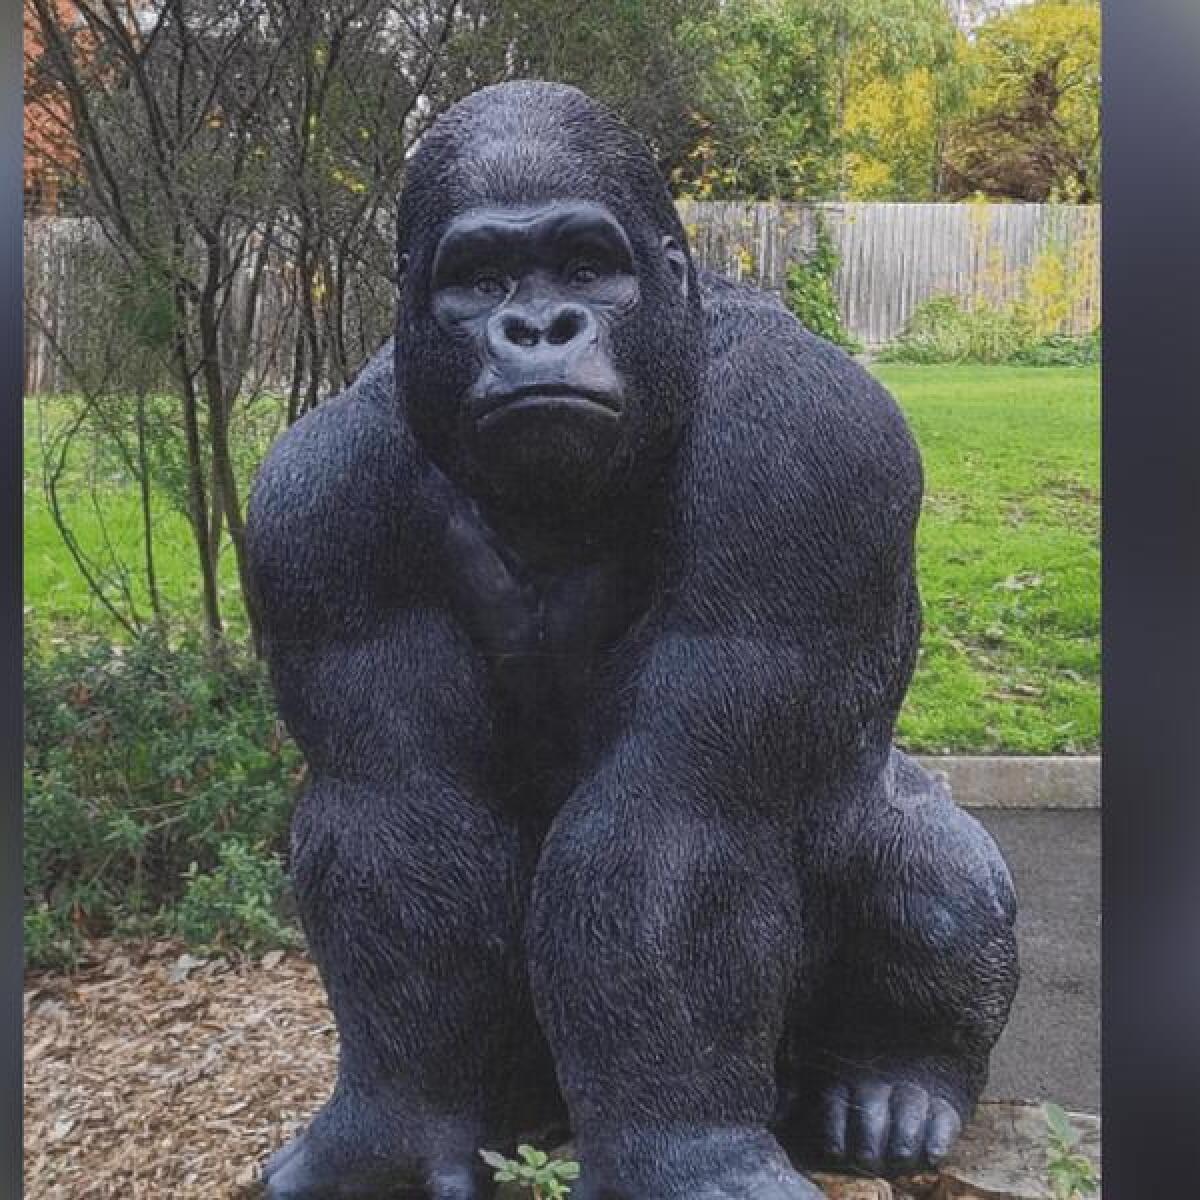 A gorilla statue stolen from a retirement community